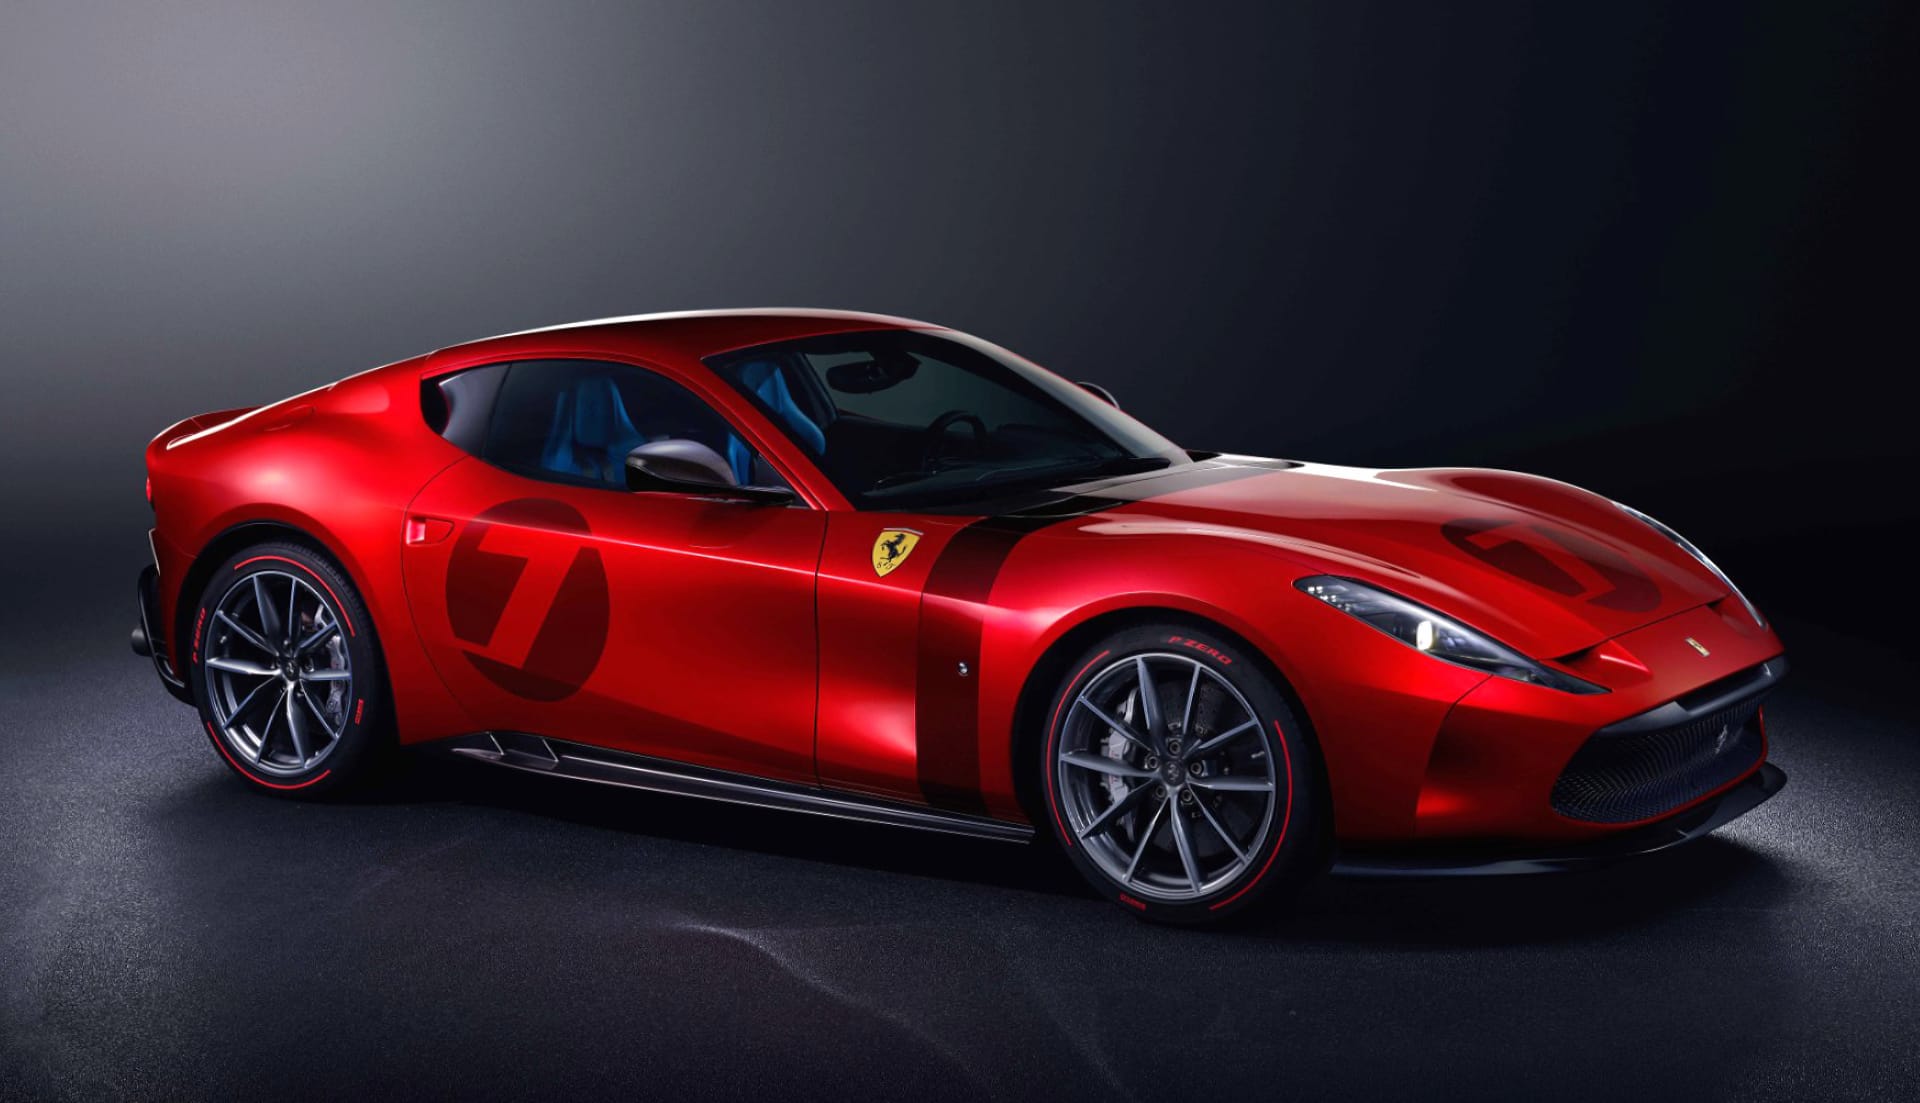 Ferrari Omologata at 640 x 1136 iPhone 5 size wallpapers HD quality